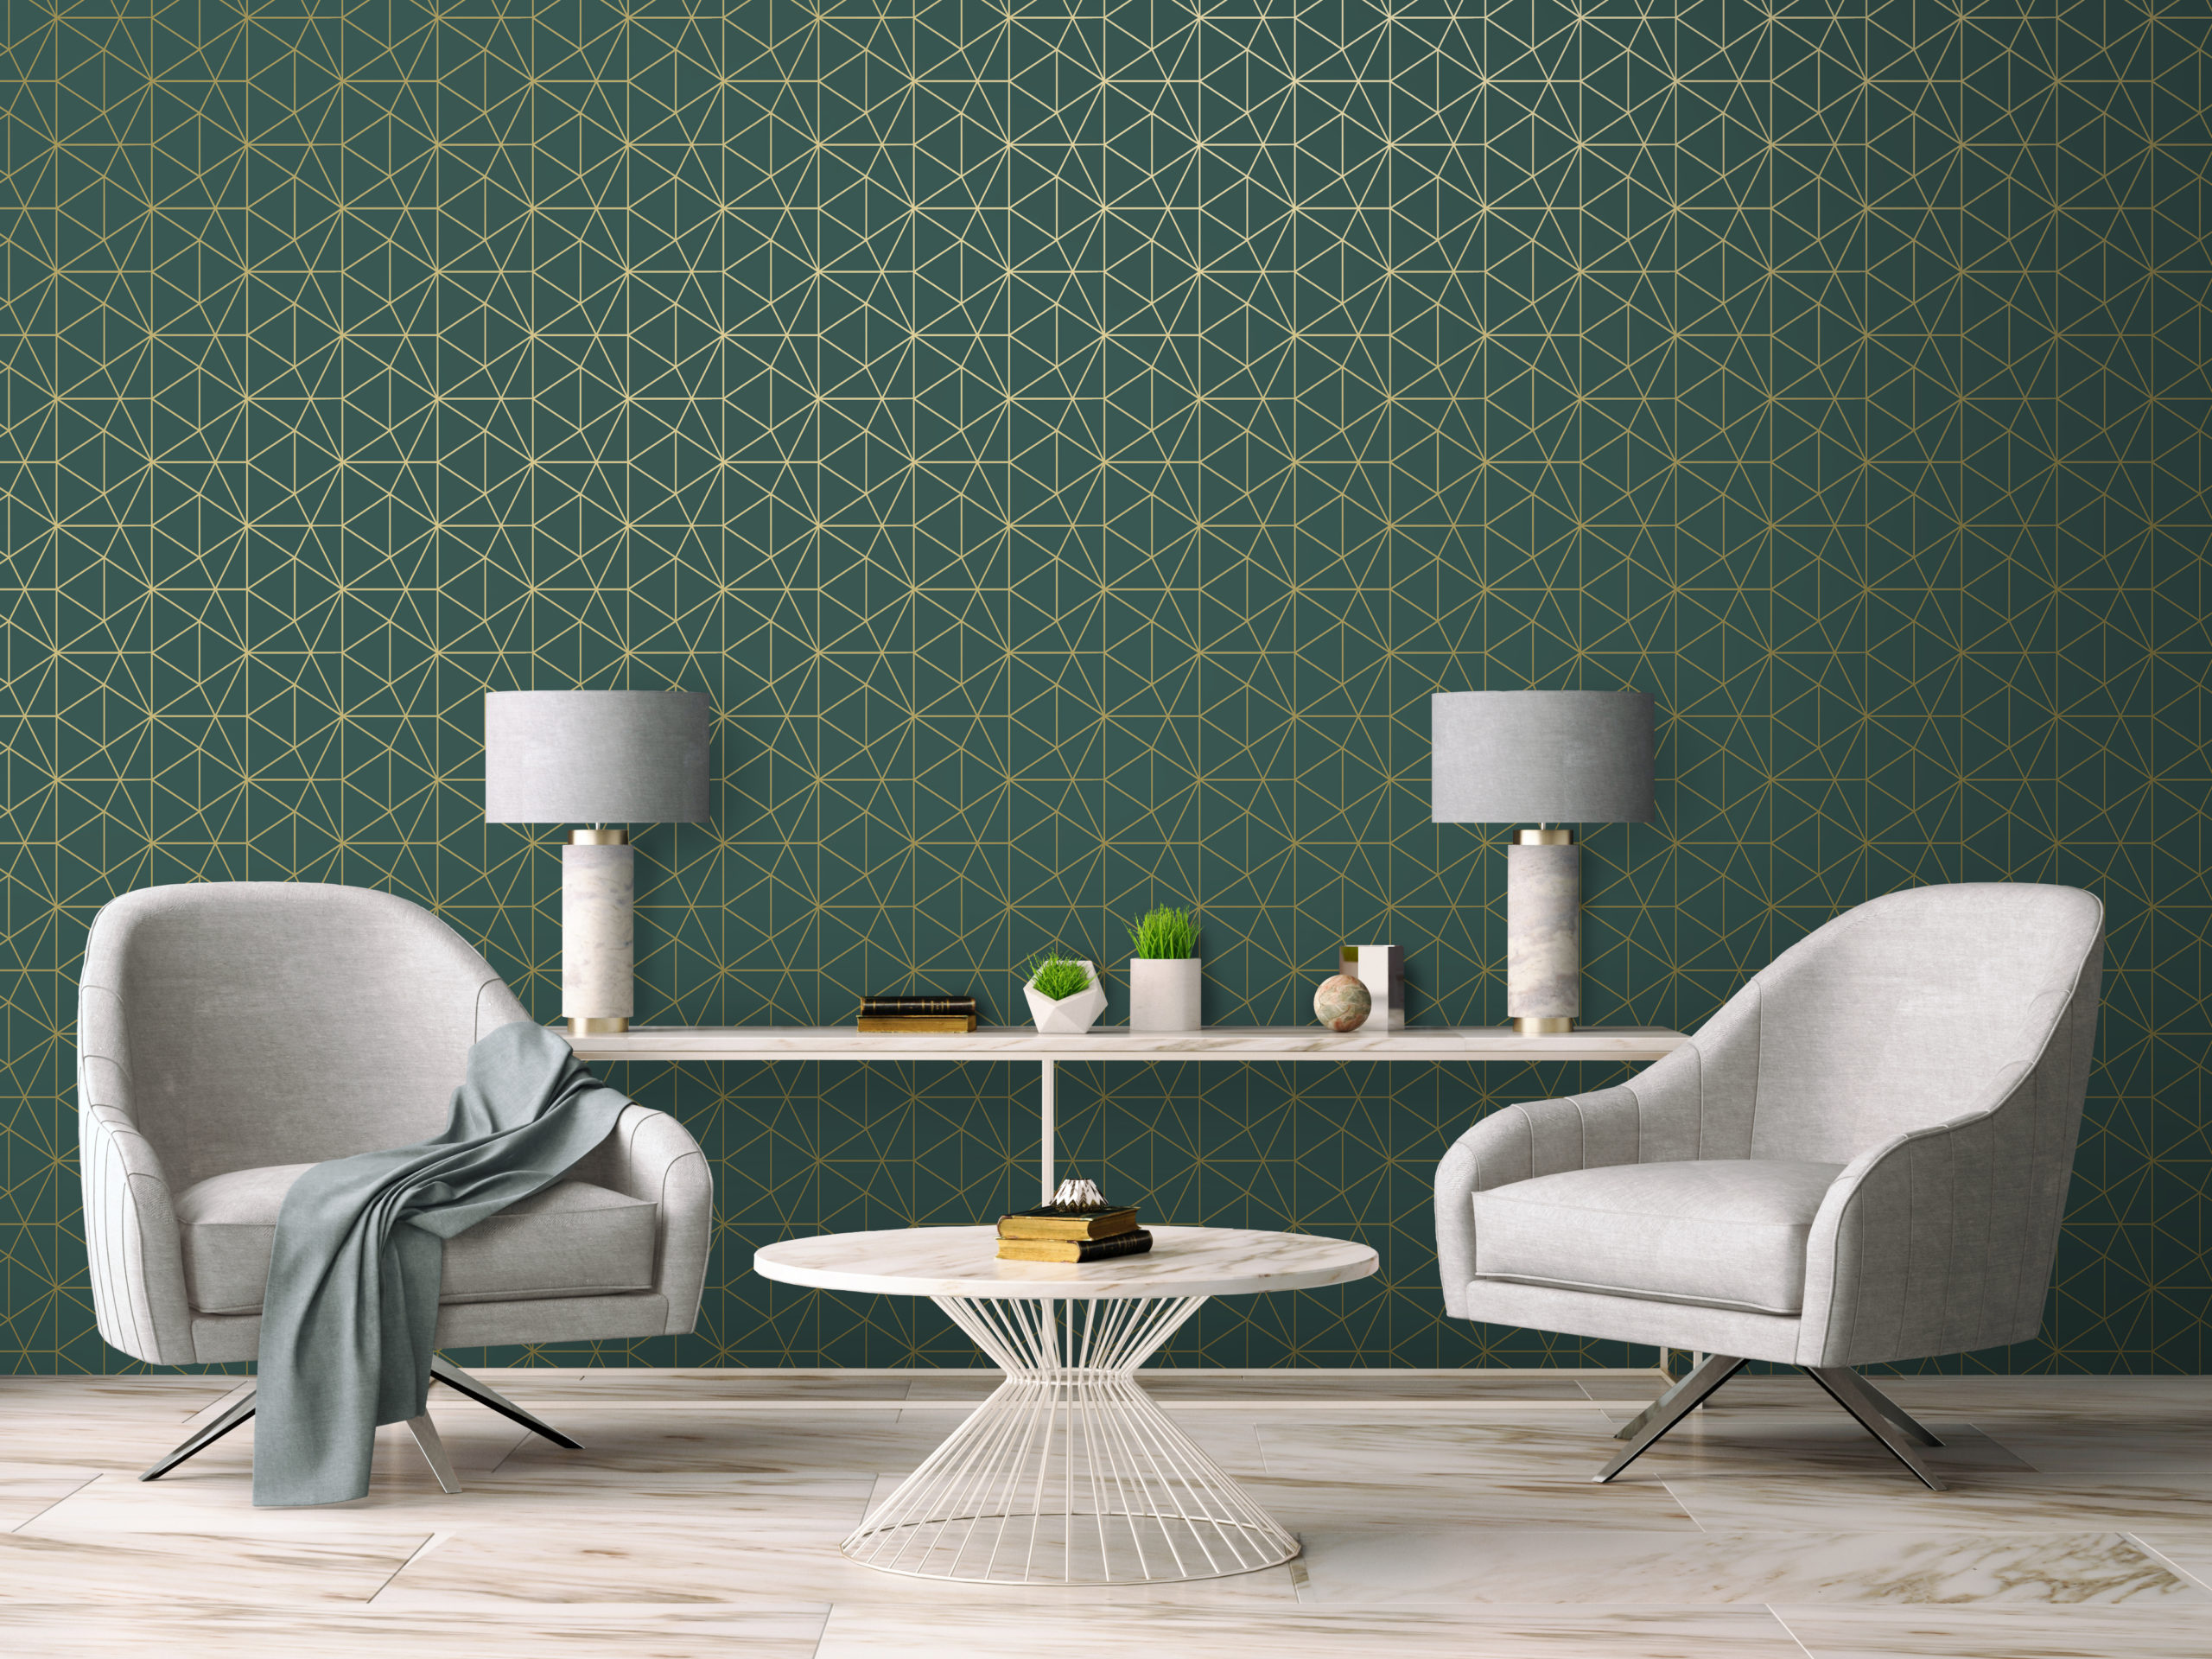 A Sneak Peek At Our New Designs For World of Wallpaper! - Argofield LTD